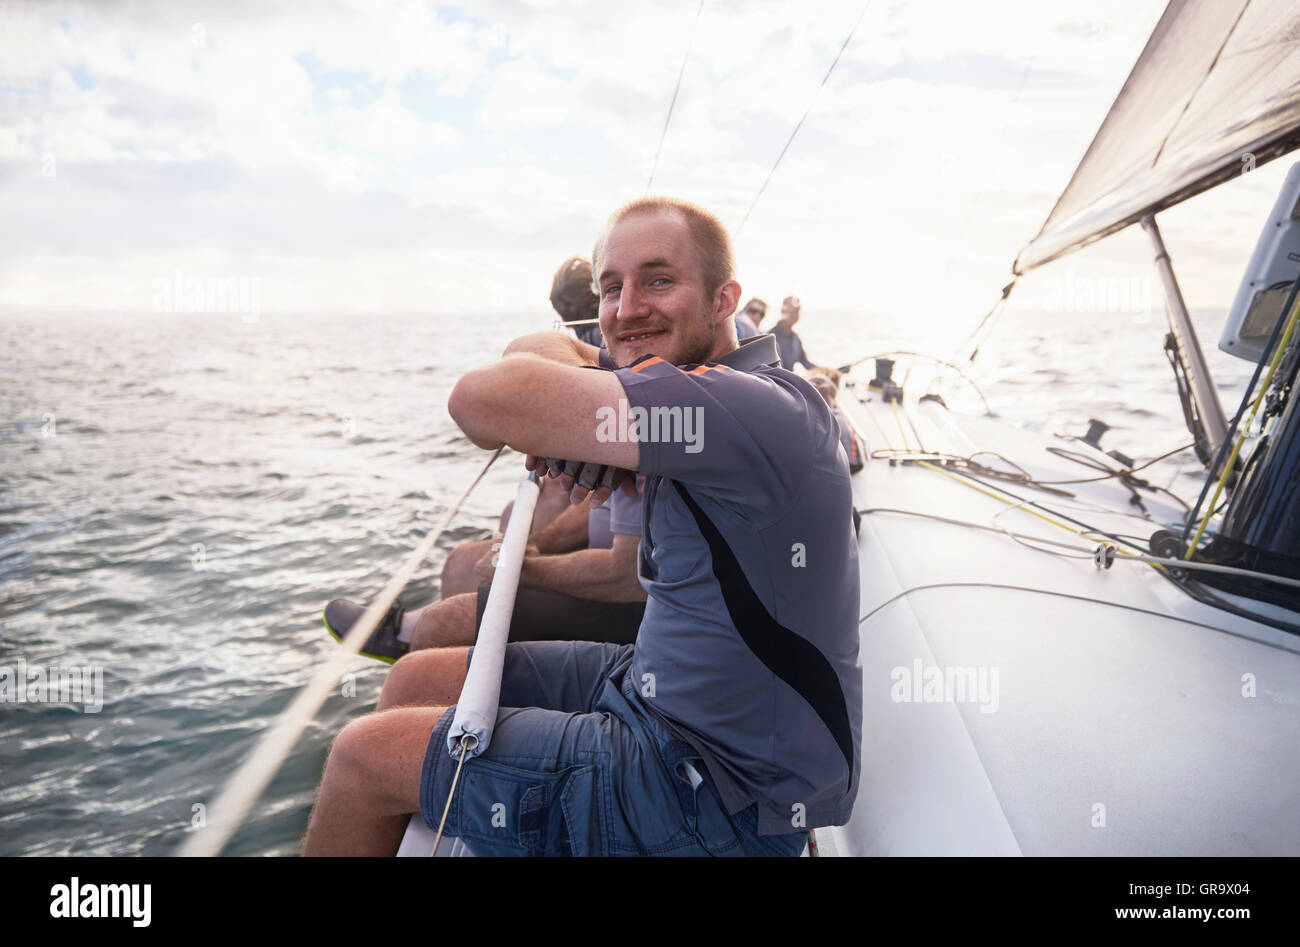 Portrait smiling man sailing on sailboat Stock Photo